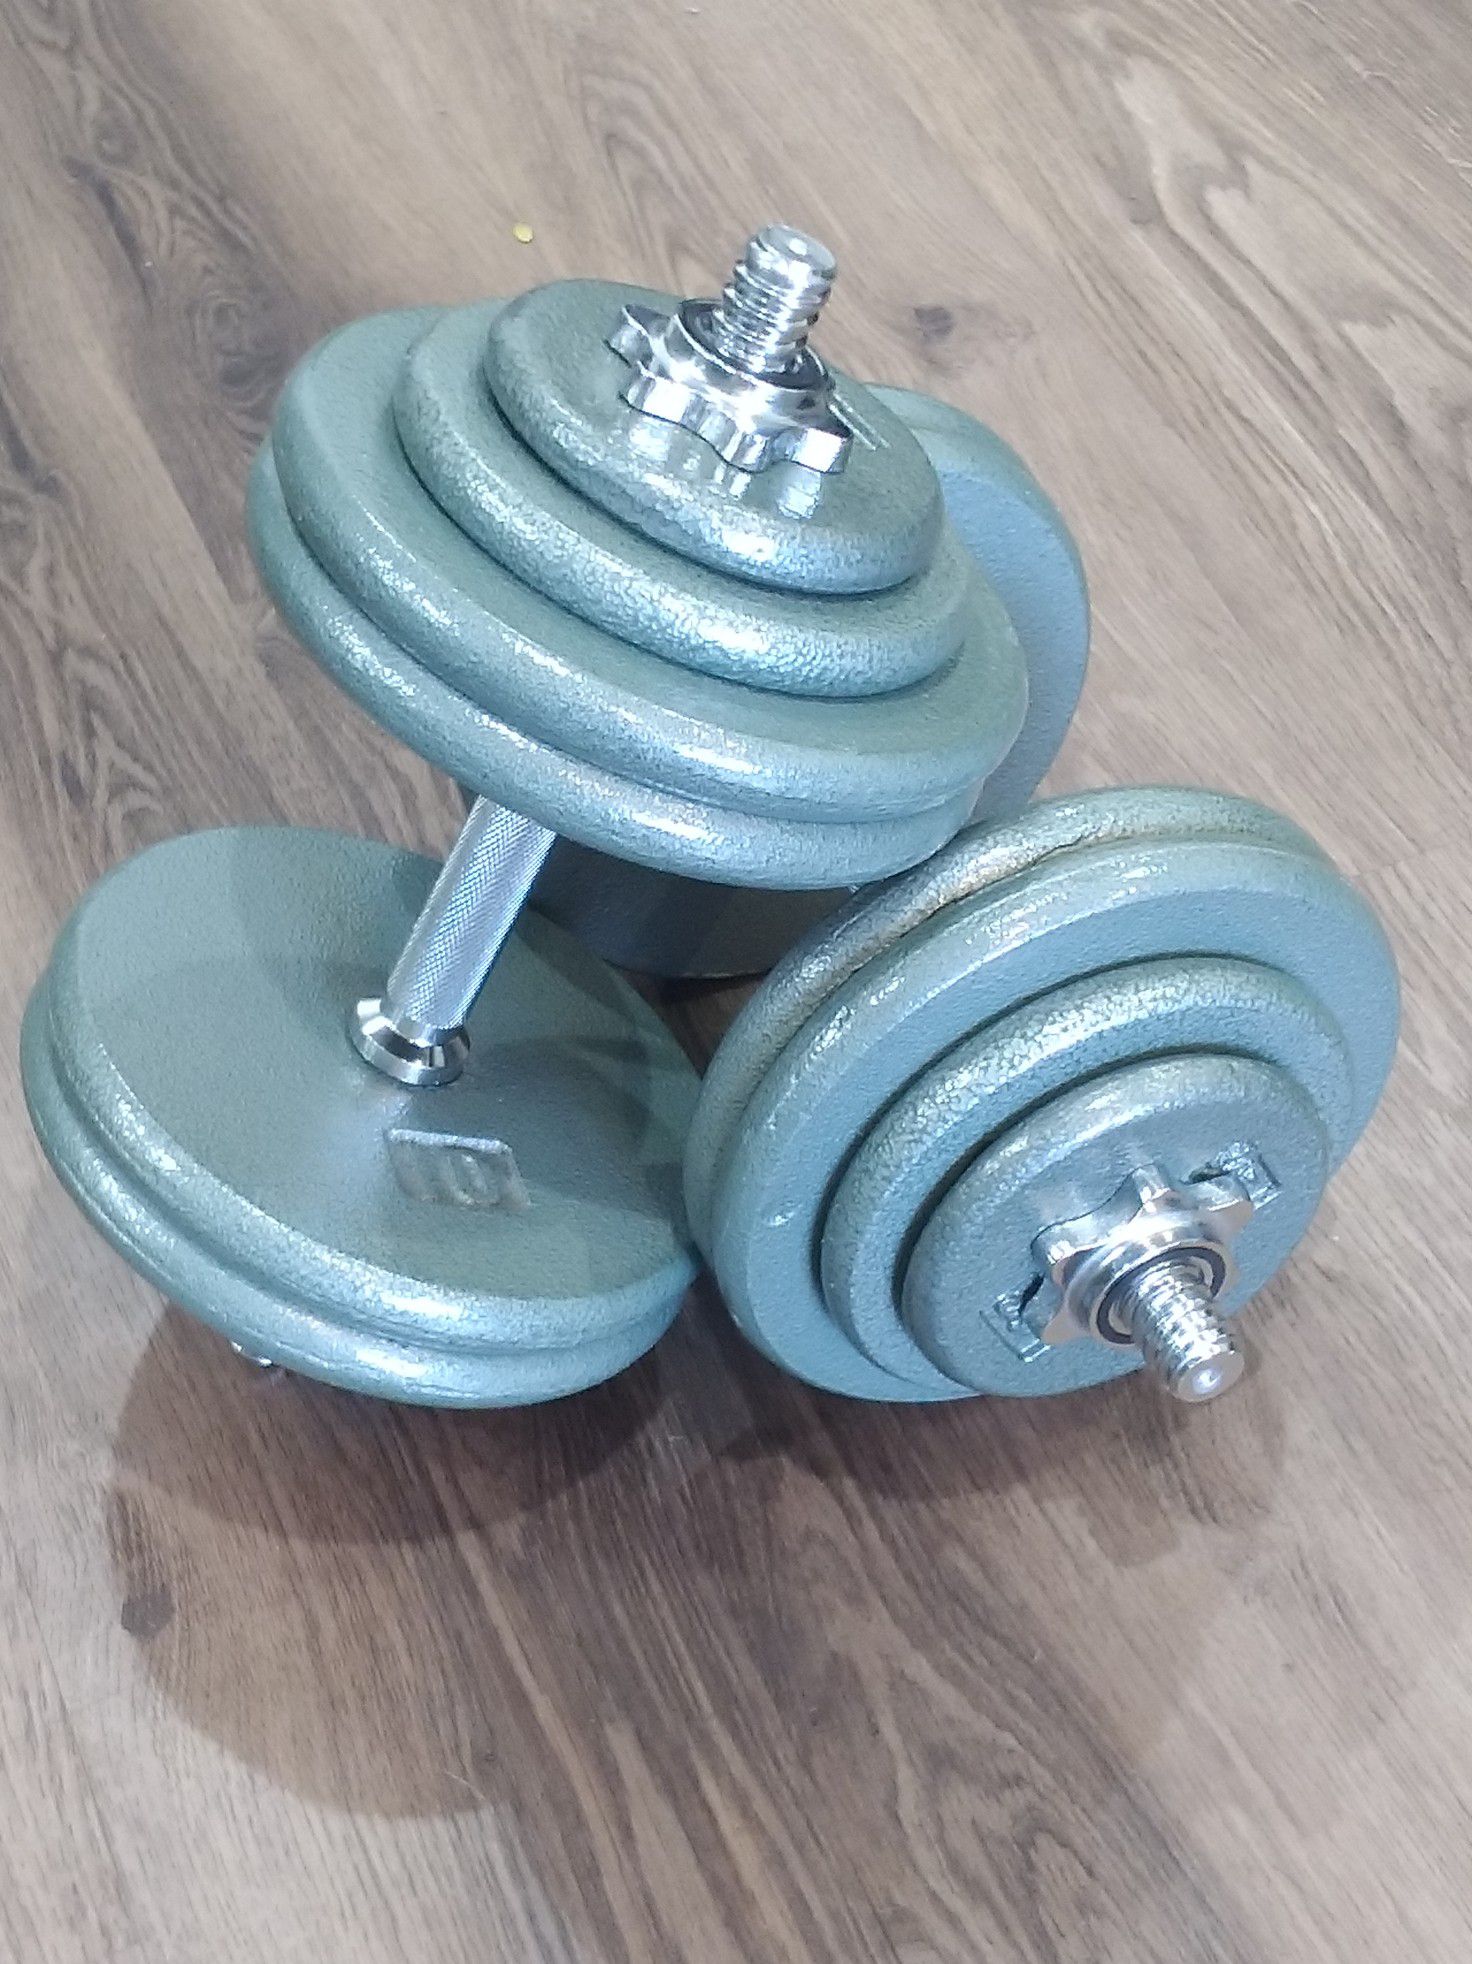 Cast iron Adjustable dumbbells set 2x58lbs(116lbs total)